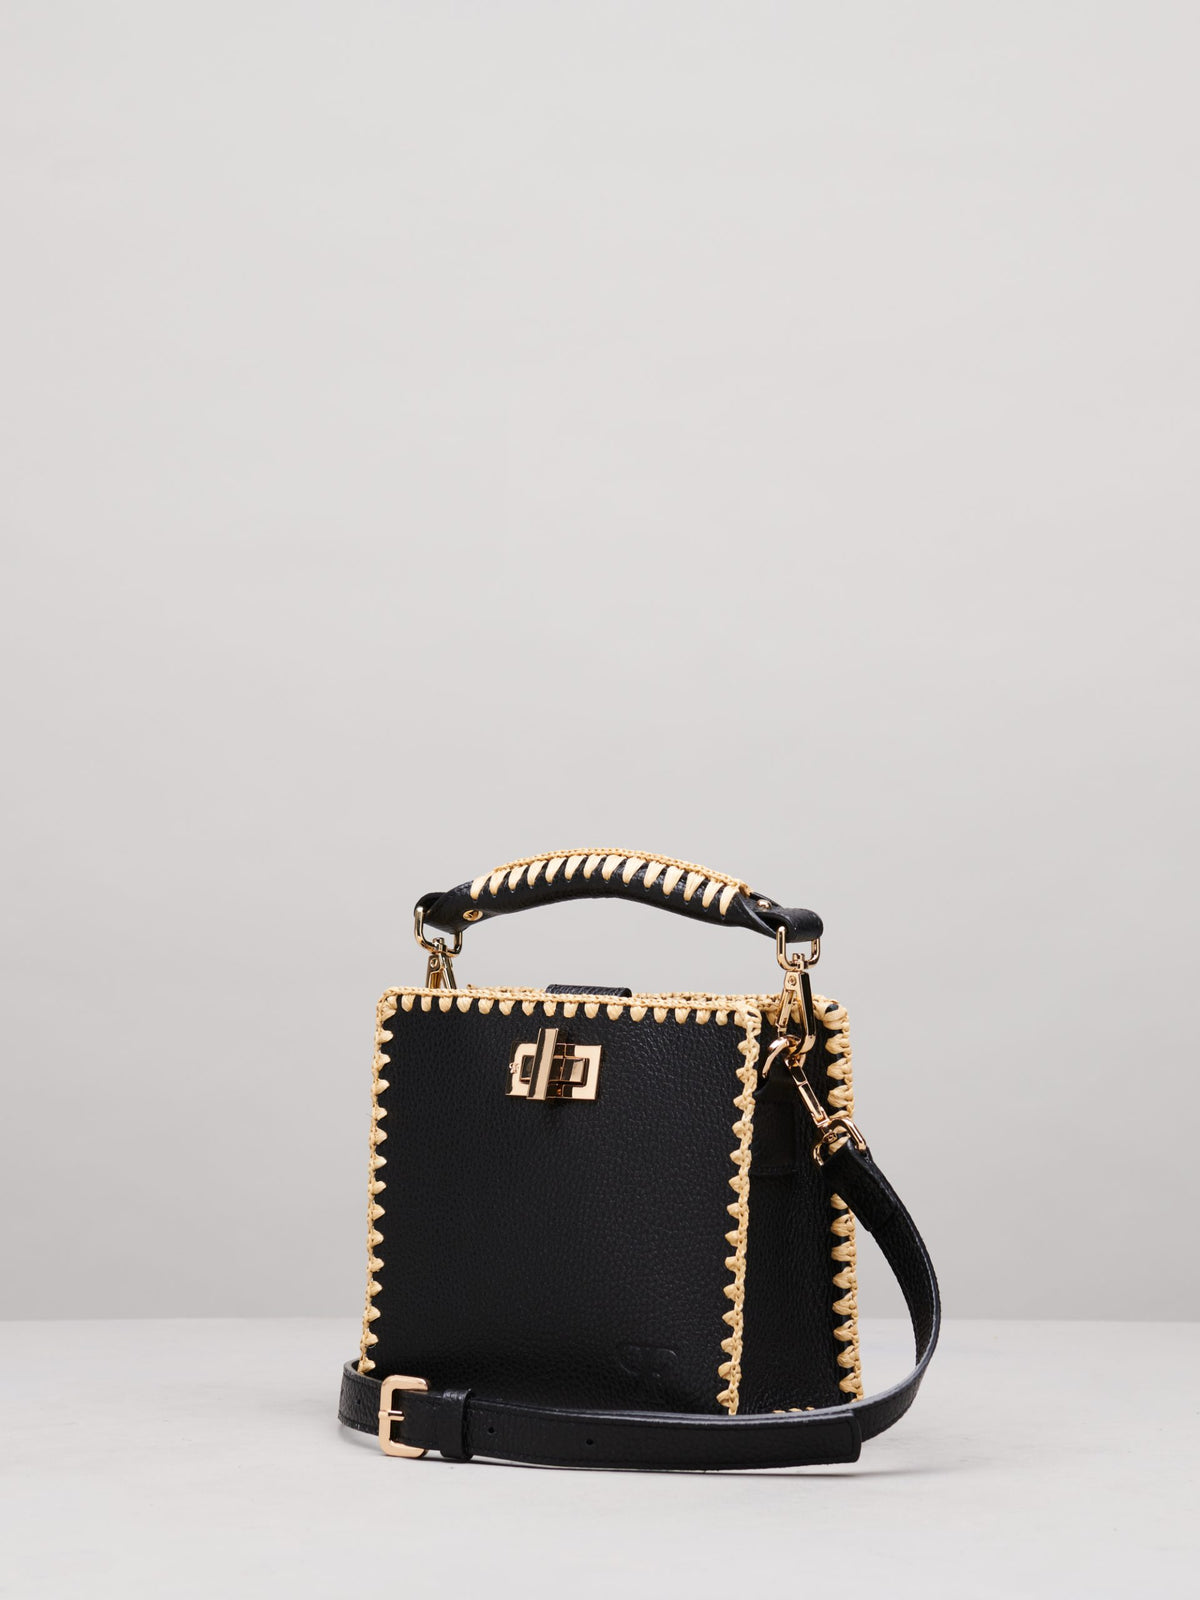 Sylvia Small Handbag in Black